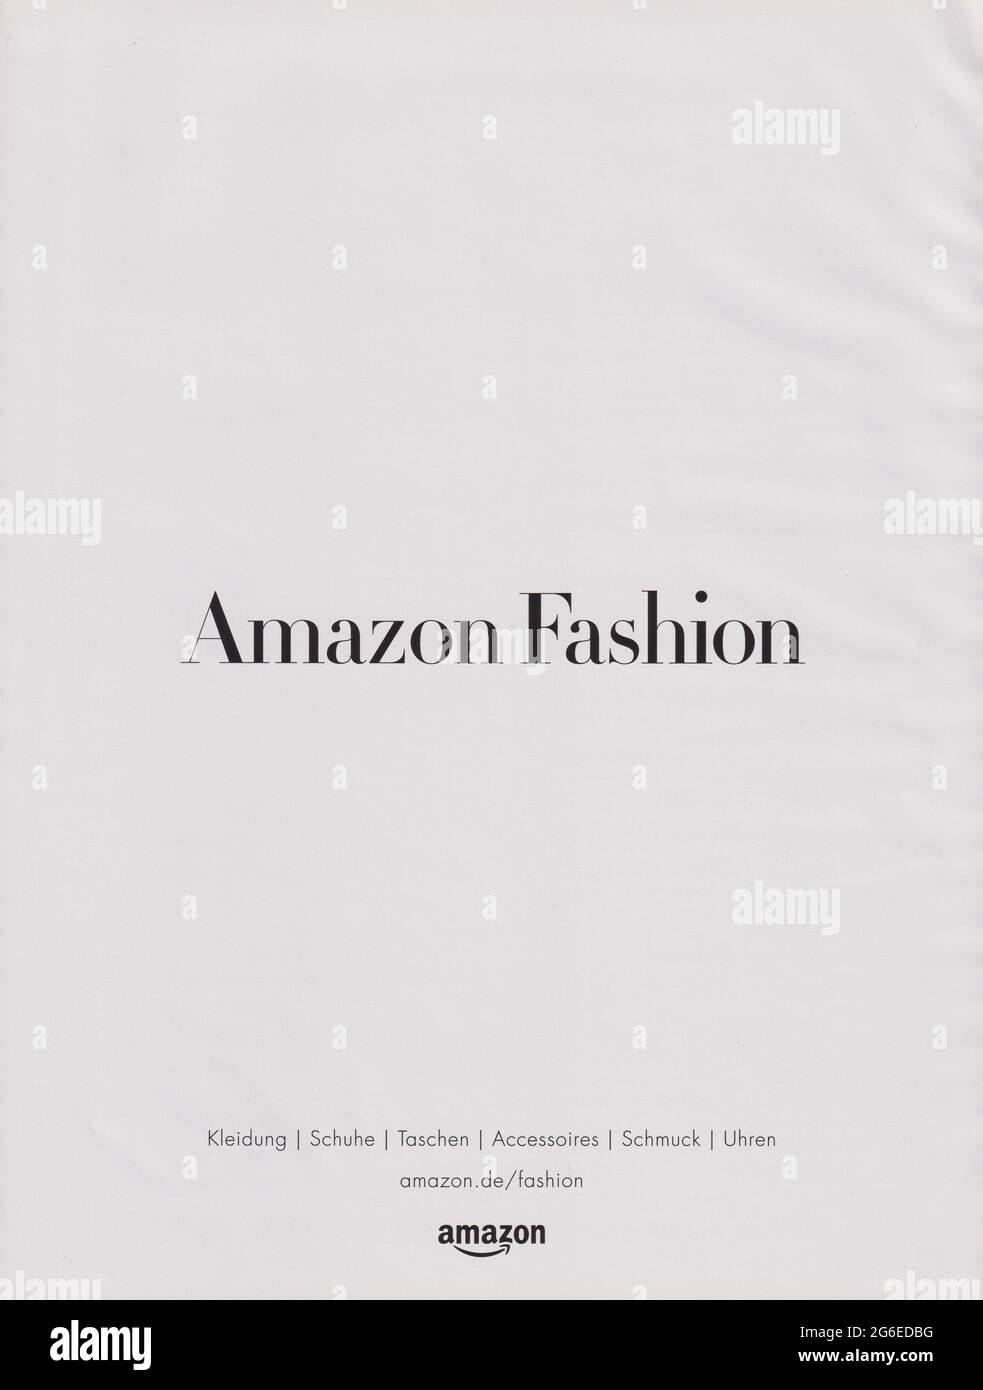 Amazon fashion hi-res stock photography and images - Alamy